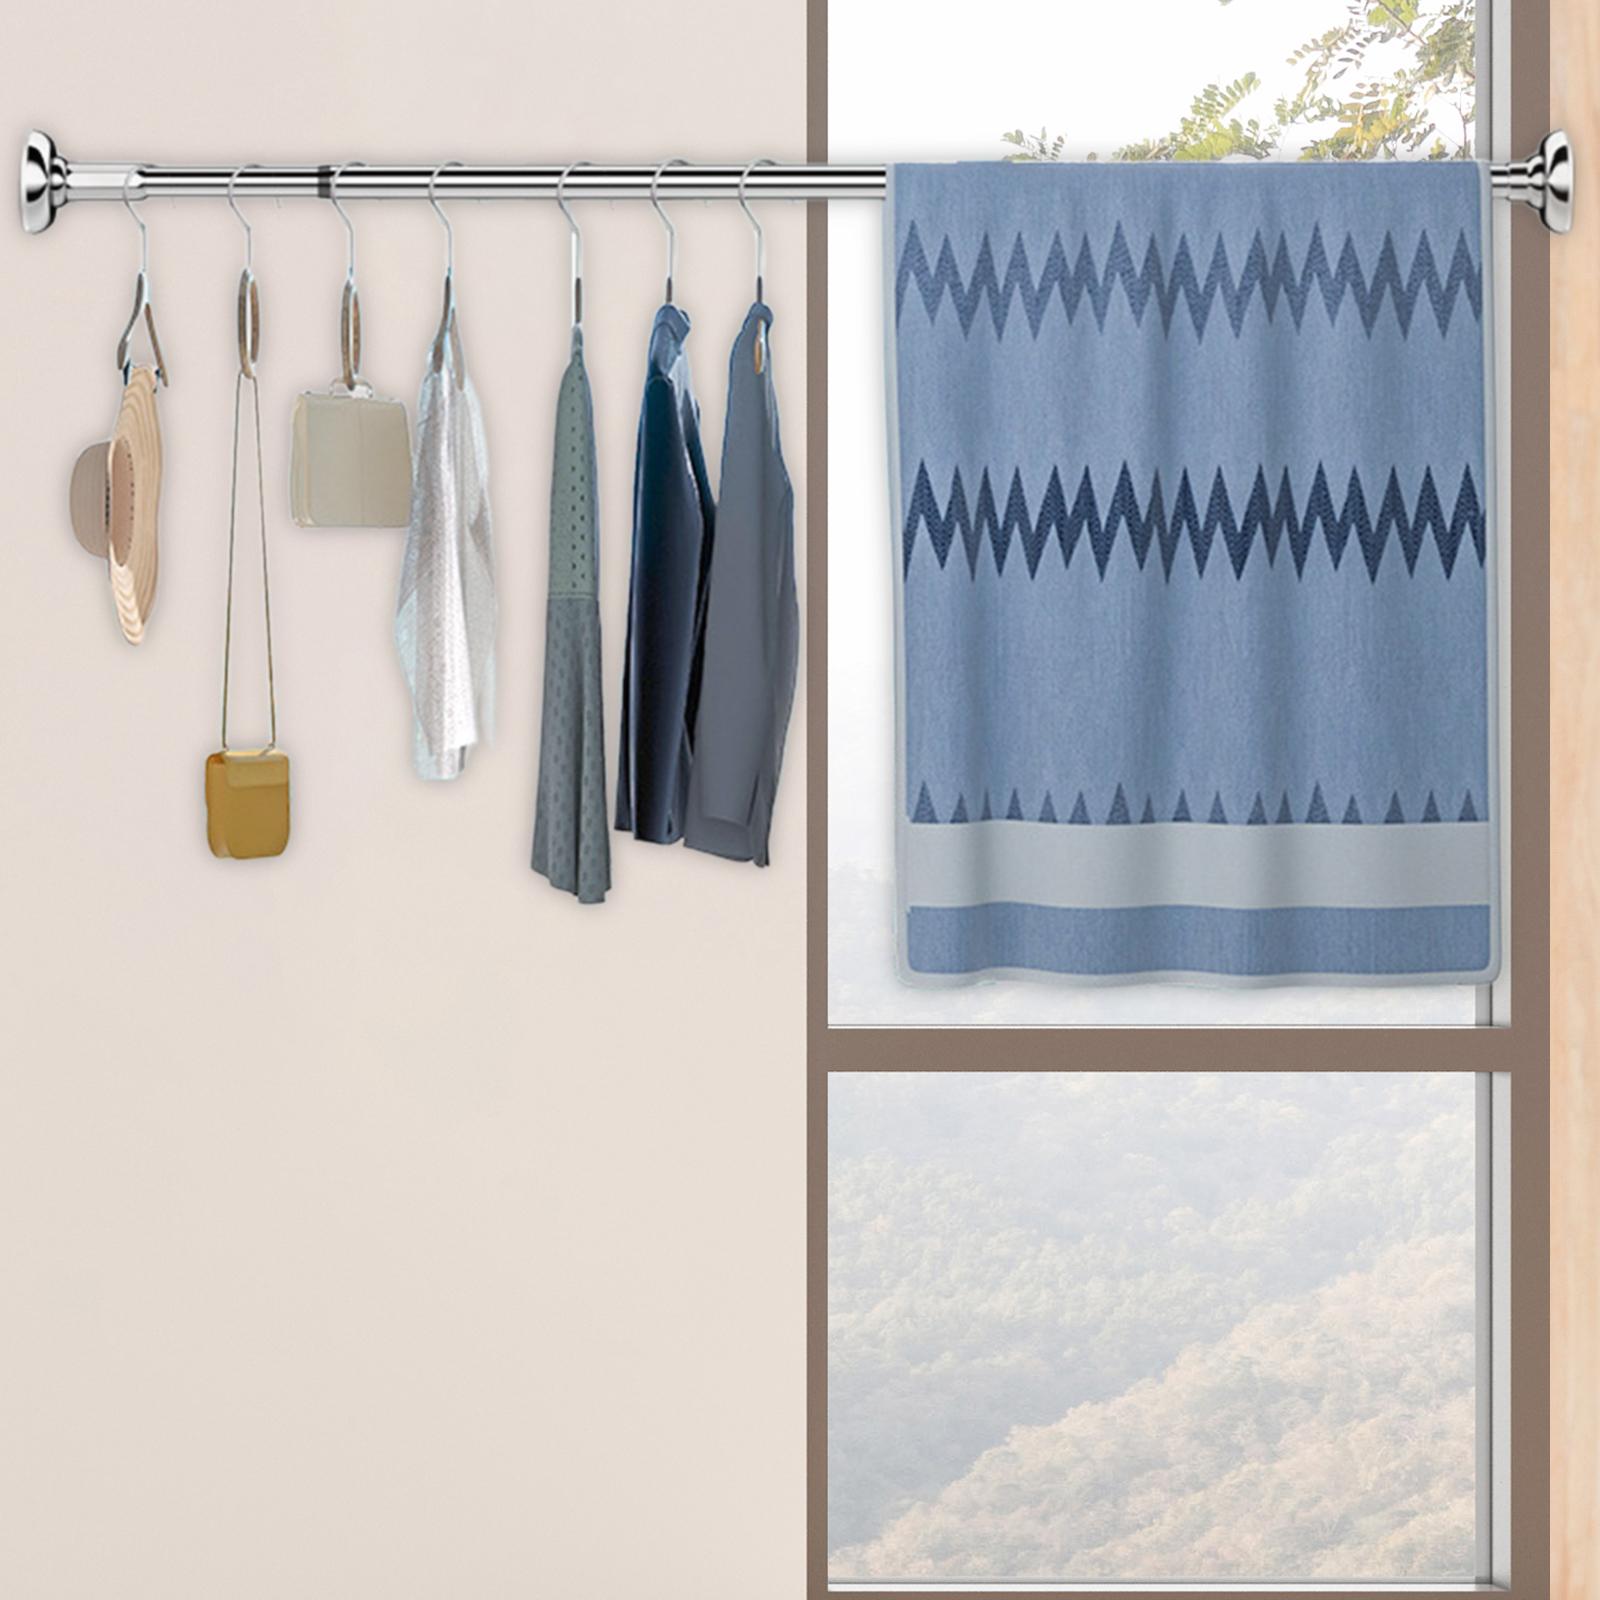 Telescopic Clothing Rod Closet Hanging Pole for Laundry Room Wardrobe Closet 0.7m to 1.2m